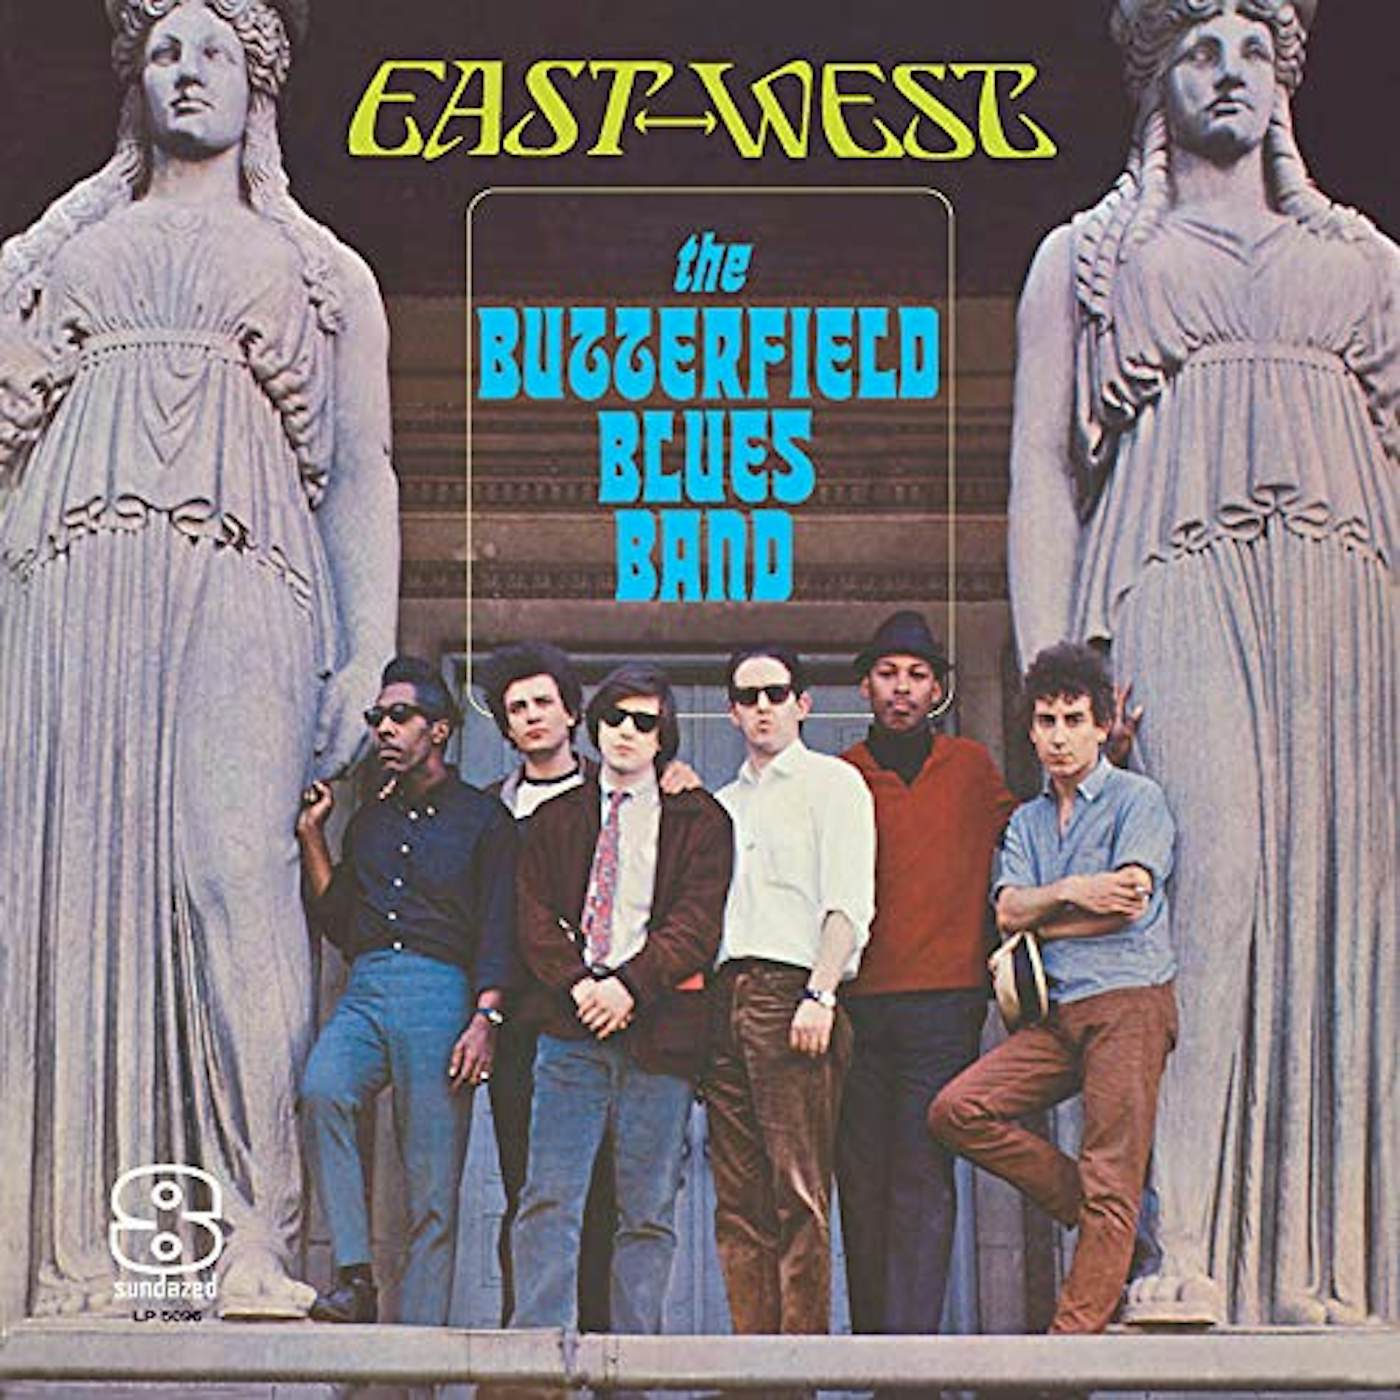 Paul Butterfield East-West Vinyl Record